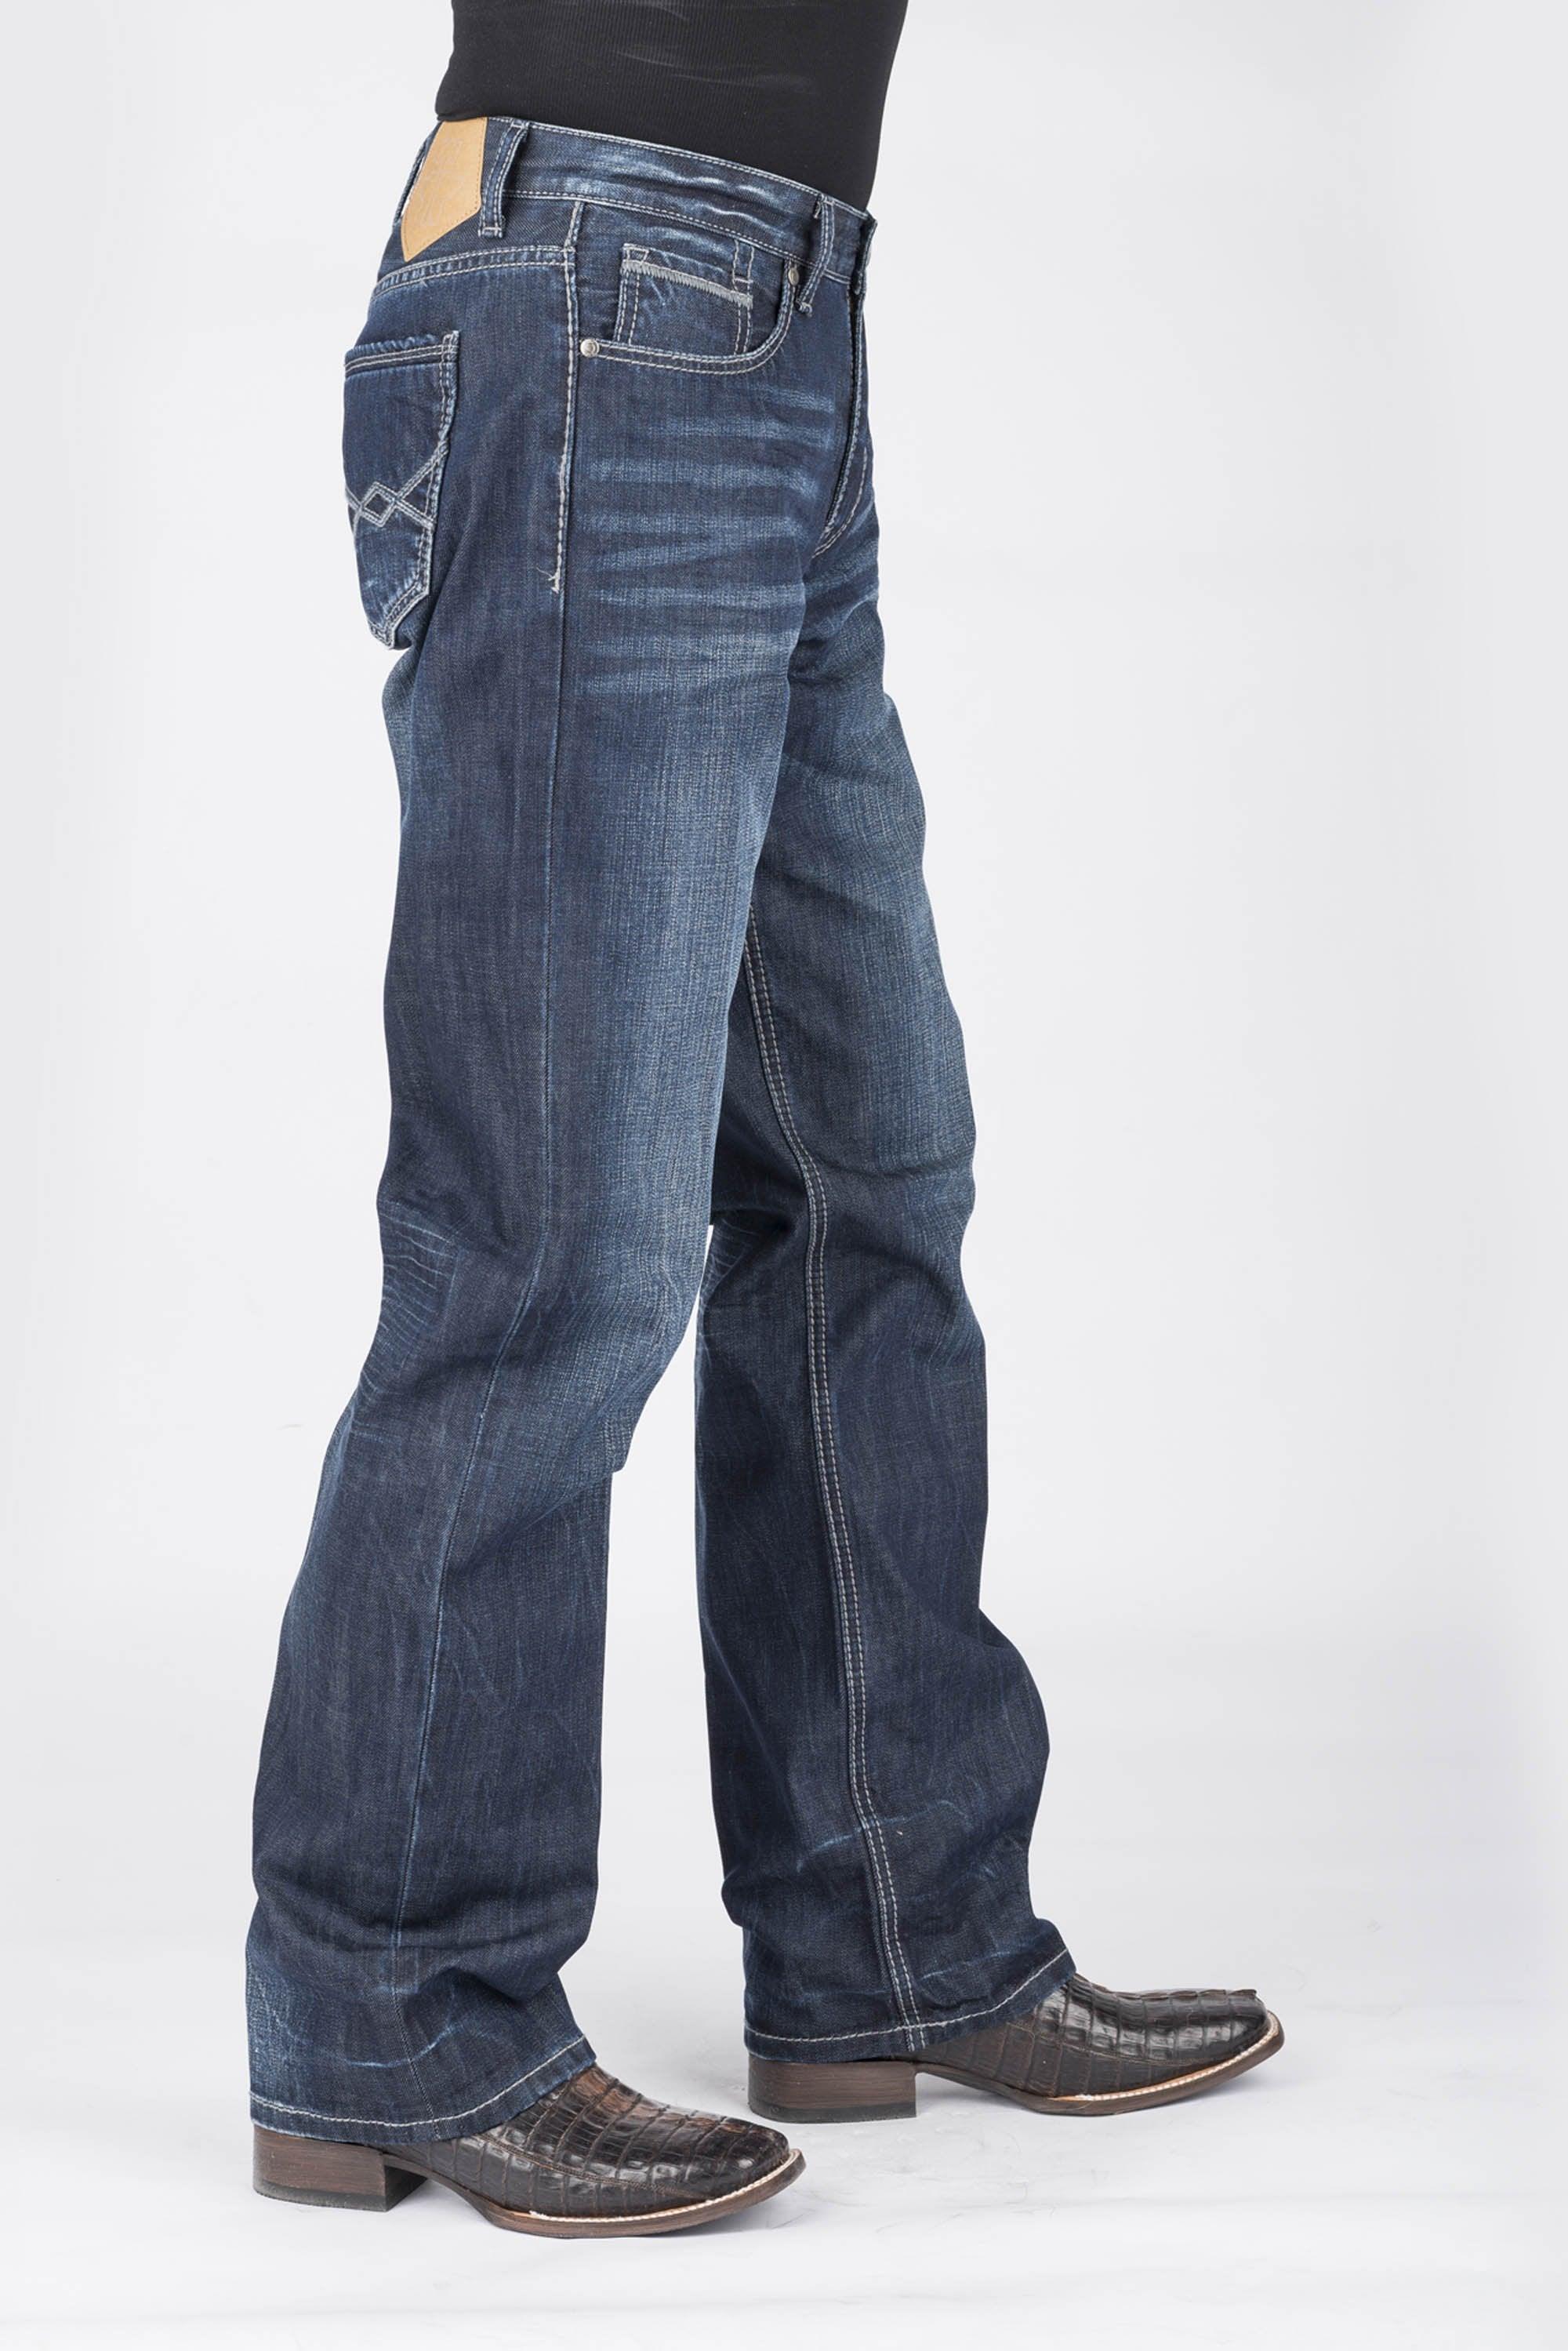 Tin Haul Mens Jeans - Flyclothing LLC